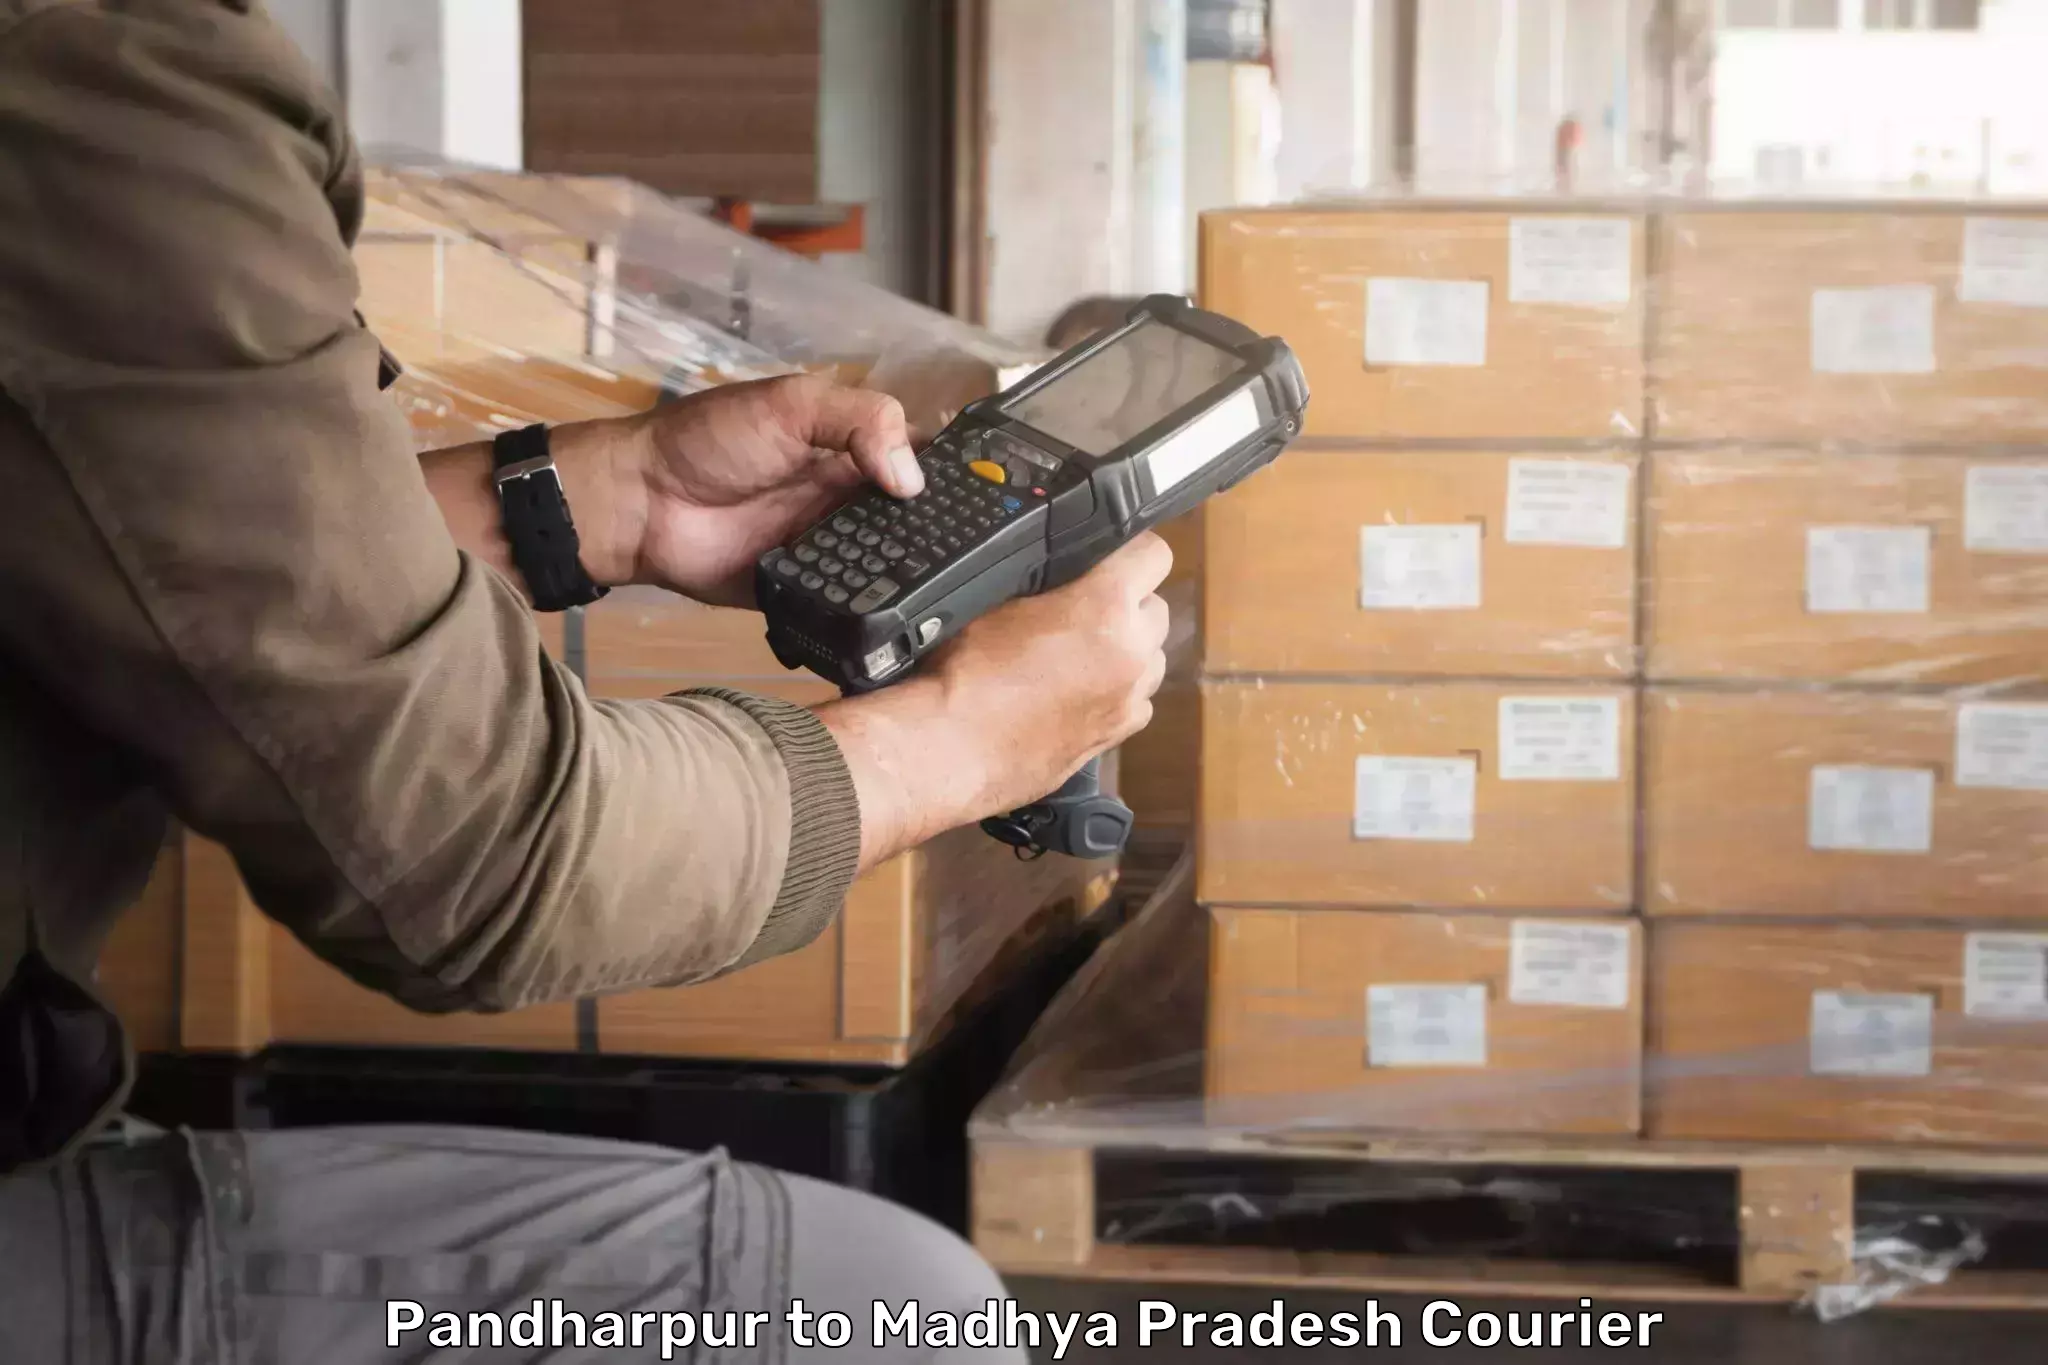 On-call courier service Pandharpur to Hoshangabad